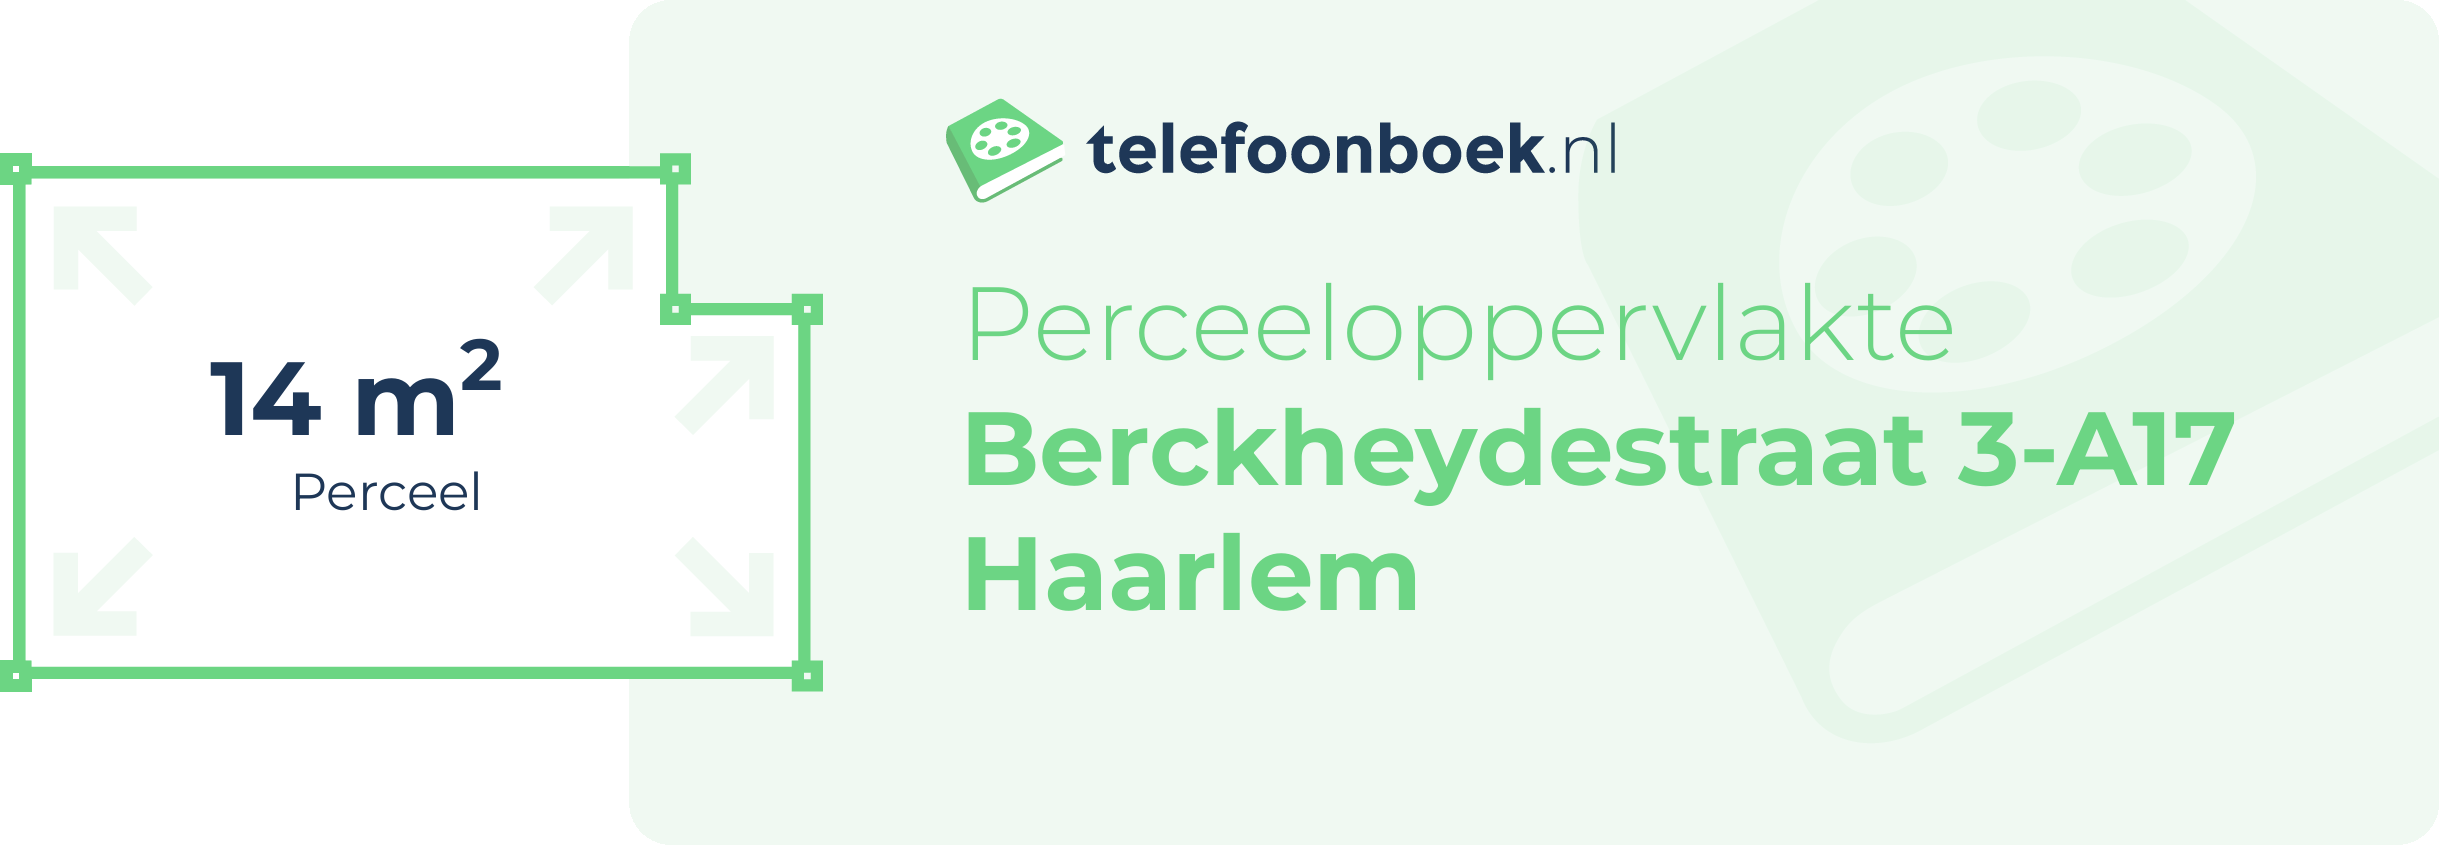 Perceeloppervlakte Berckheydestraat 3-A17 Haarlem